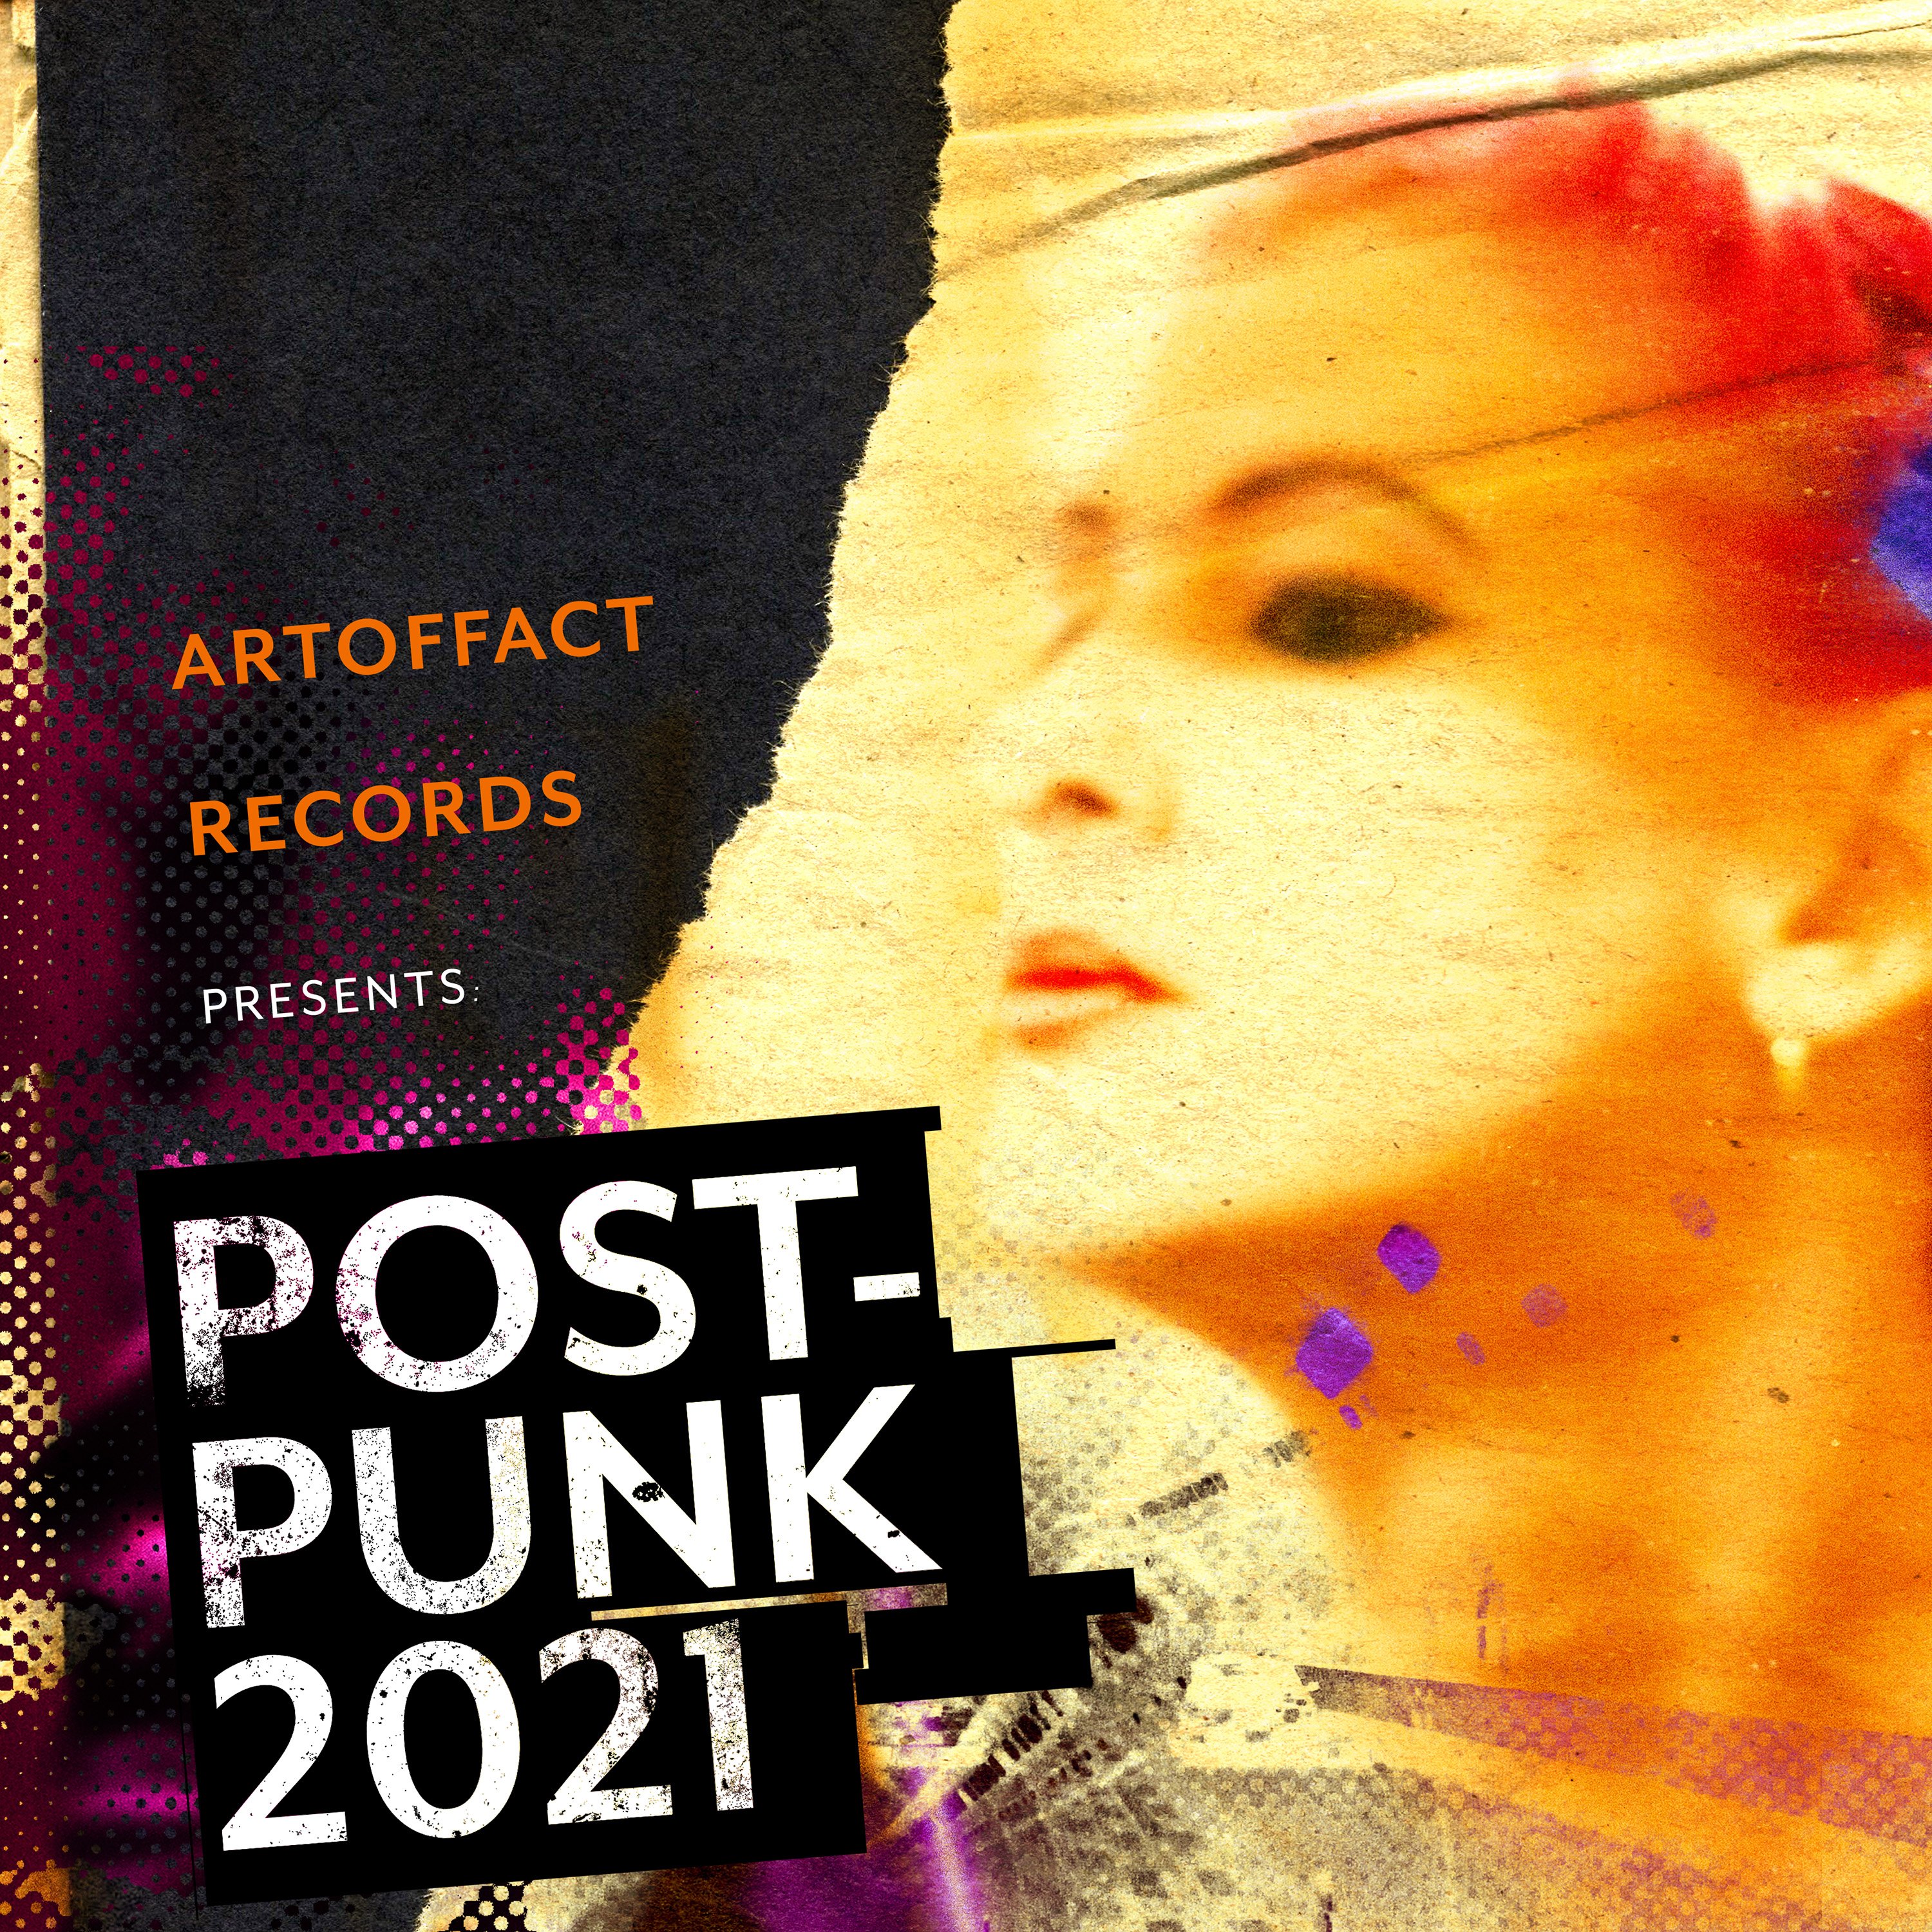 Presents post. Artoffact records картинки. Va - 2021 - Artoffact records - Post-Punk 2021. Kælan mikla обложка.